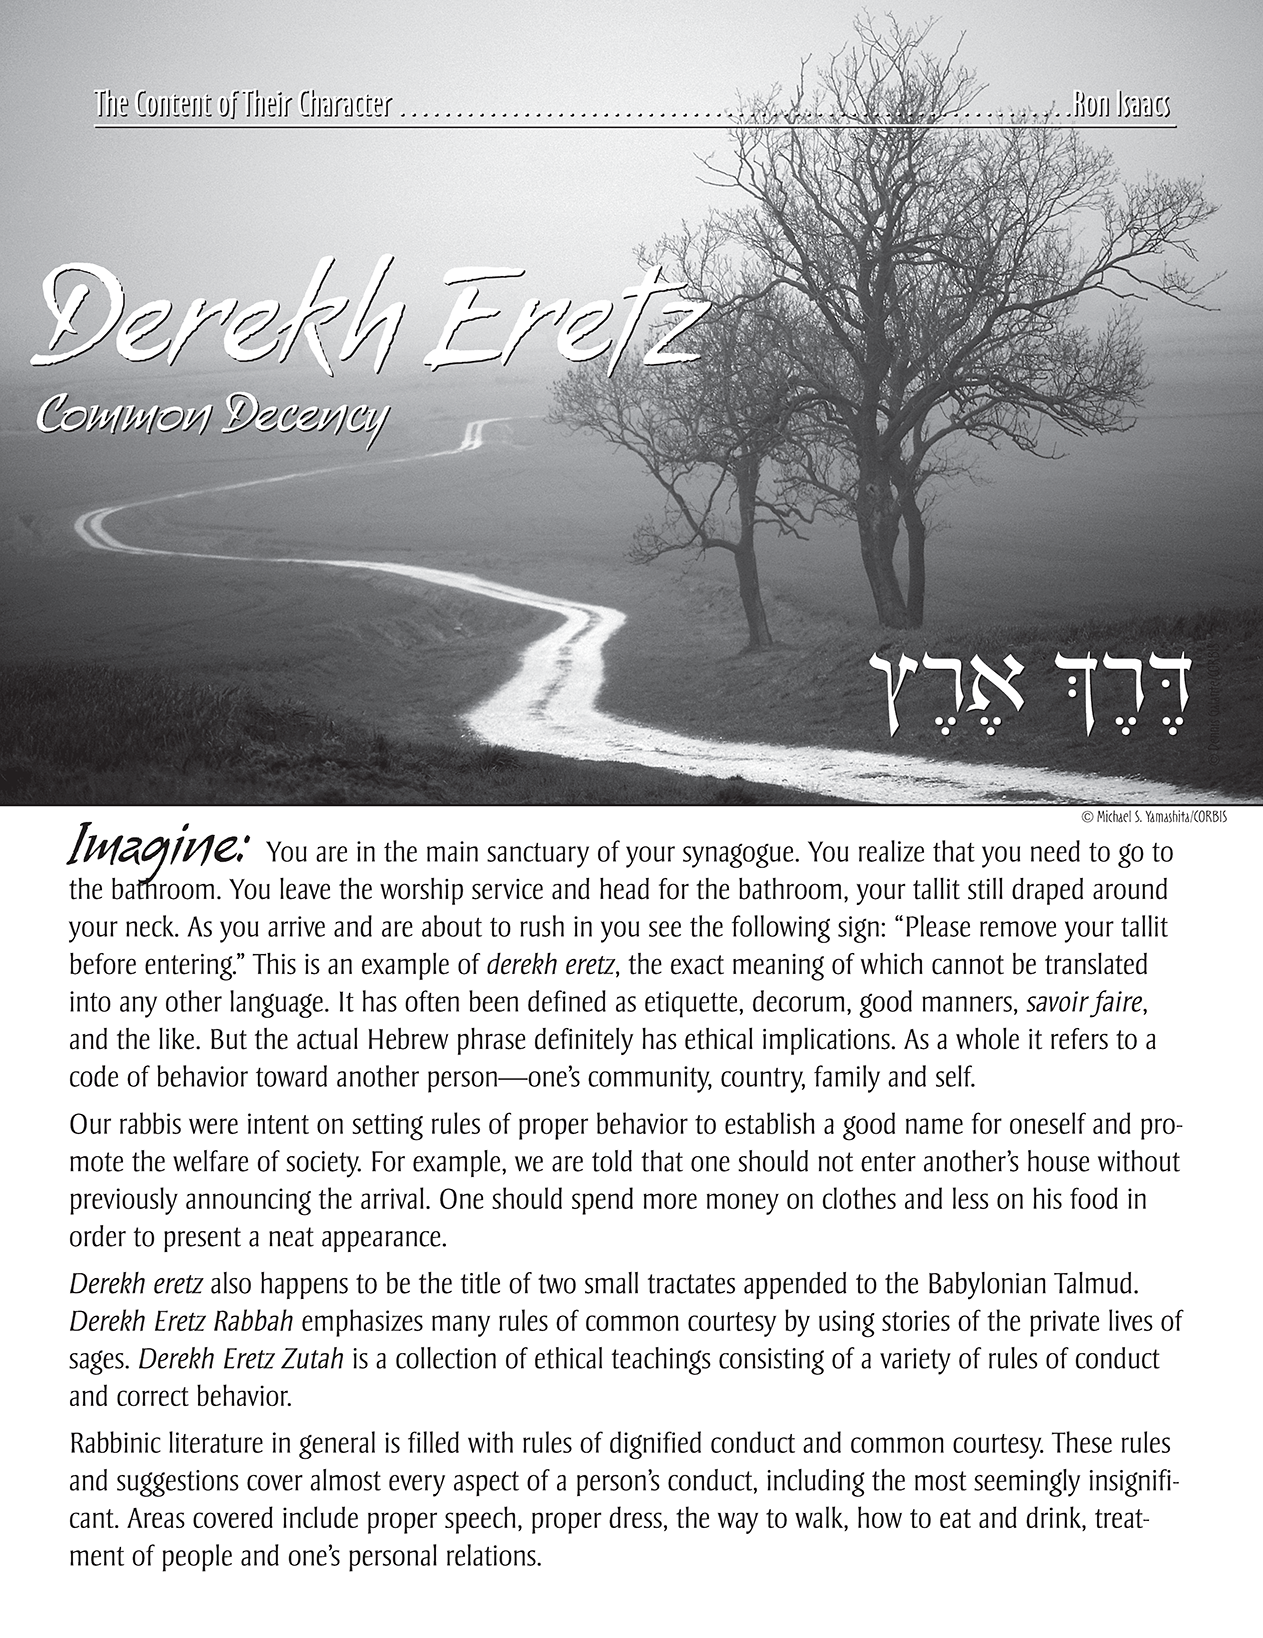 Content of Their Character: Derekh Eretz